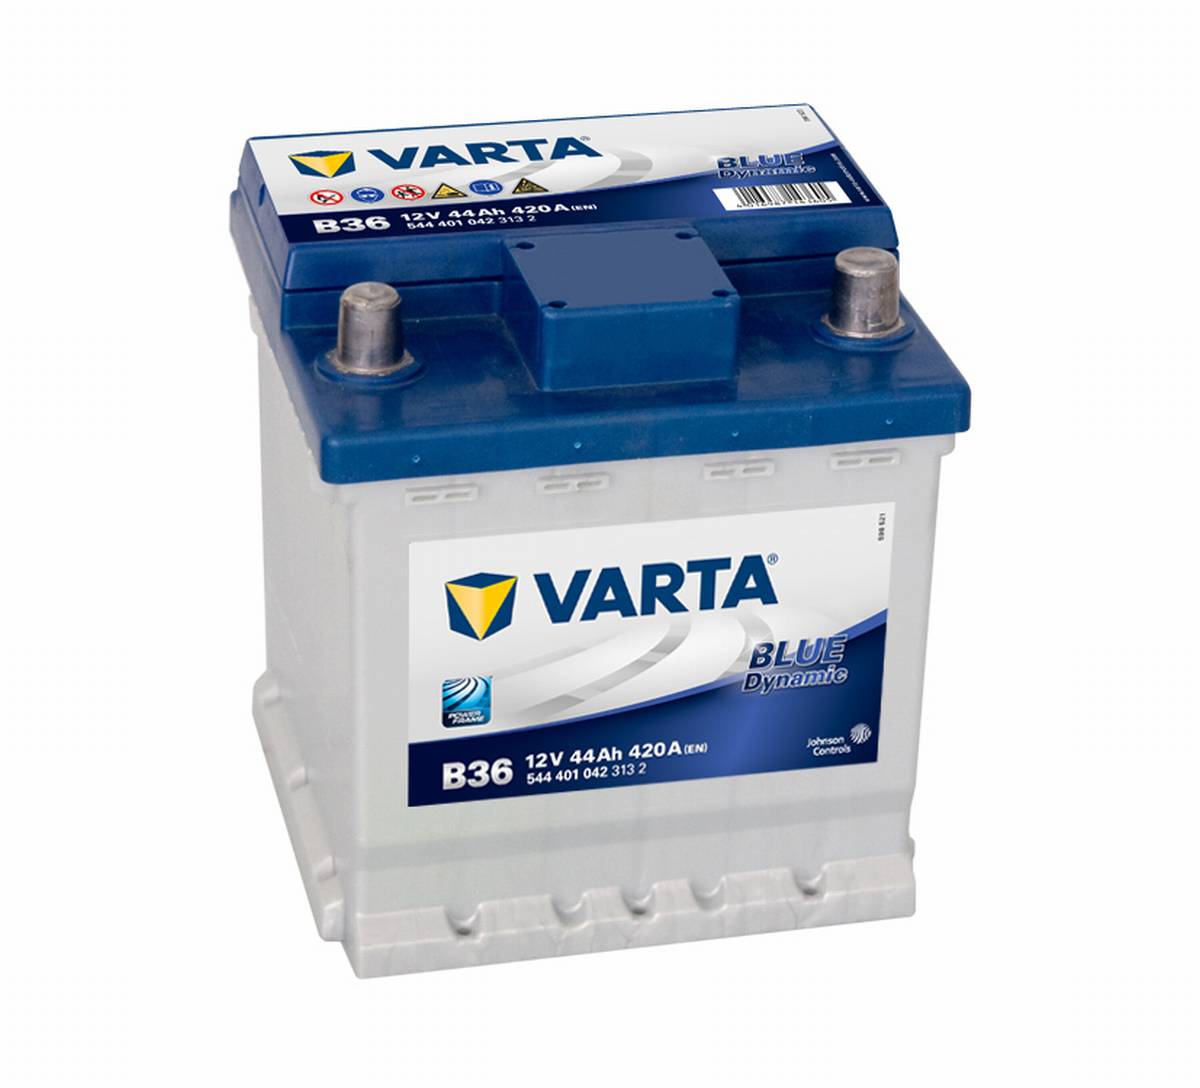 Varta BLUE Dynamic 574 012 068 3132 E11 12V 74Ah 680A/EN car battery, Starter batteries, Boots & Marine, Batteries by application